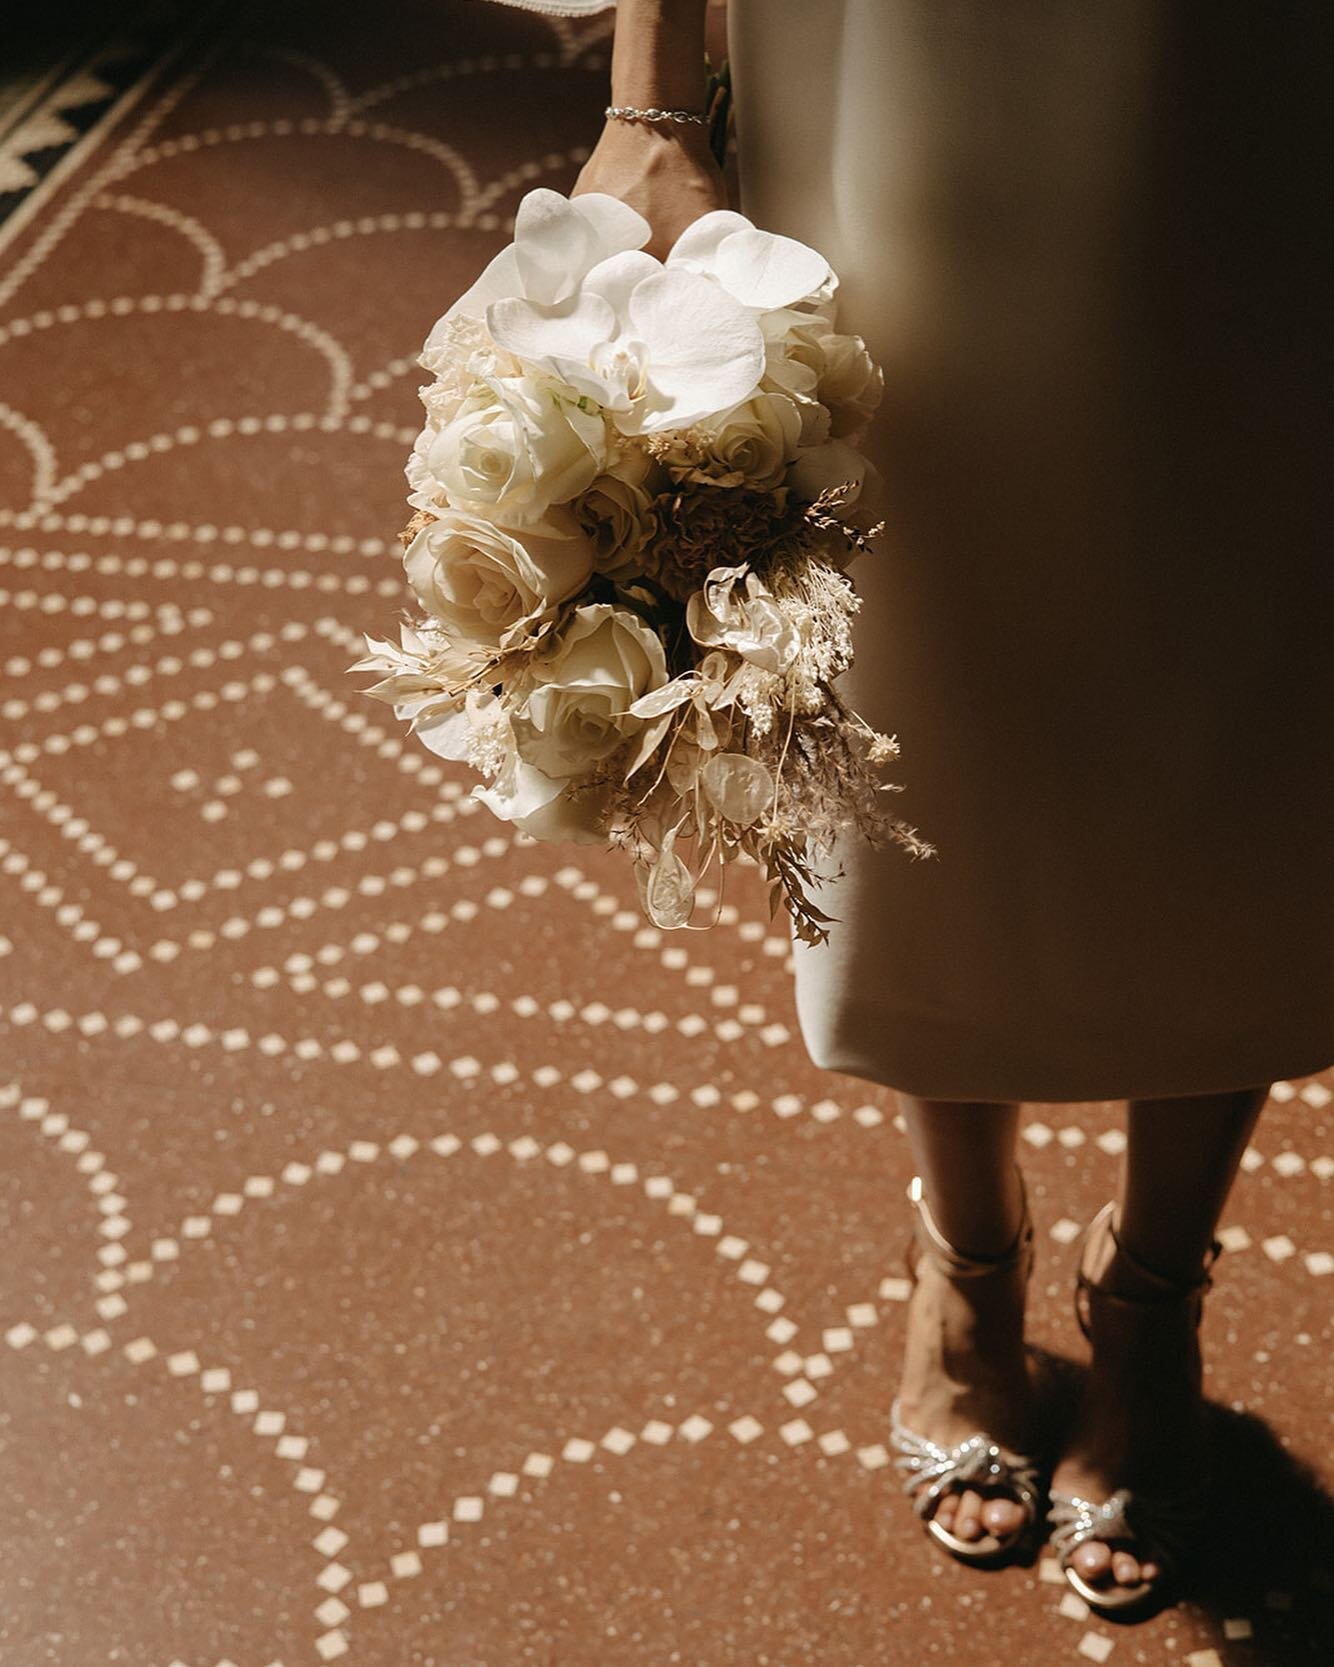 A quiet moment before the &lsquo;I do&rsquo;&hellip; 🤍

Wedding bouquet: @whisperingvintage 
Photography: @moniquemaarschalkphoto